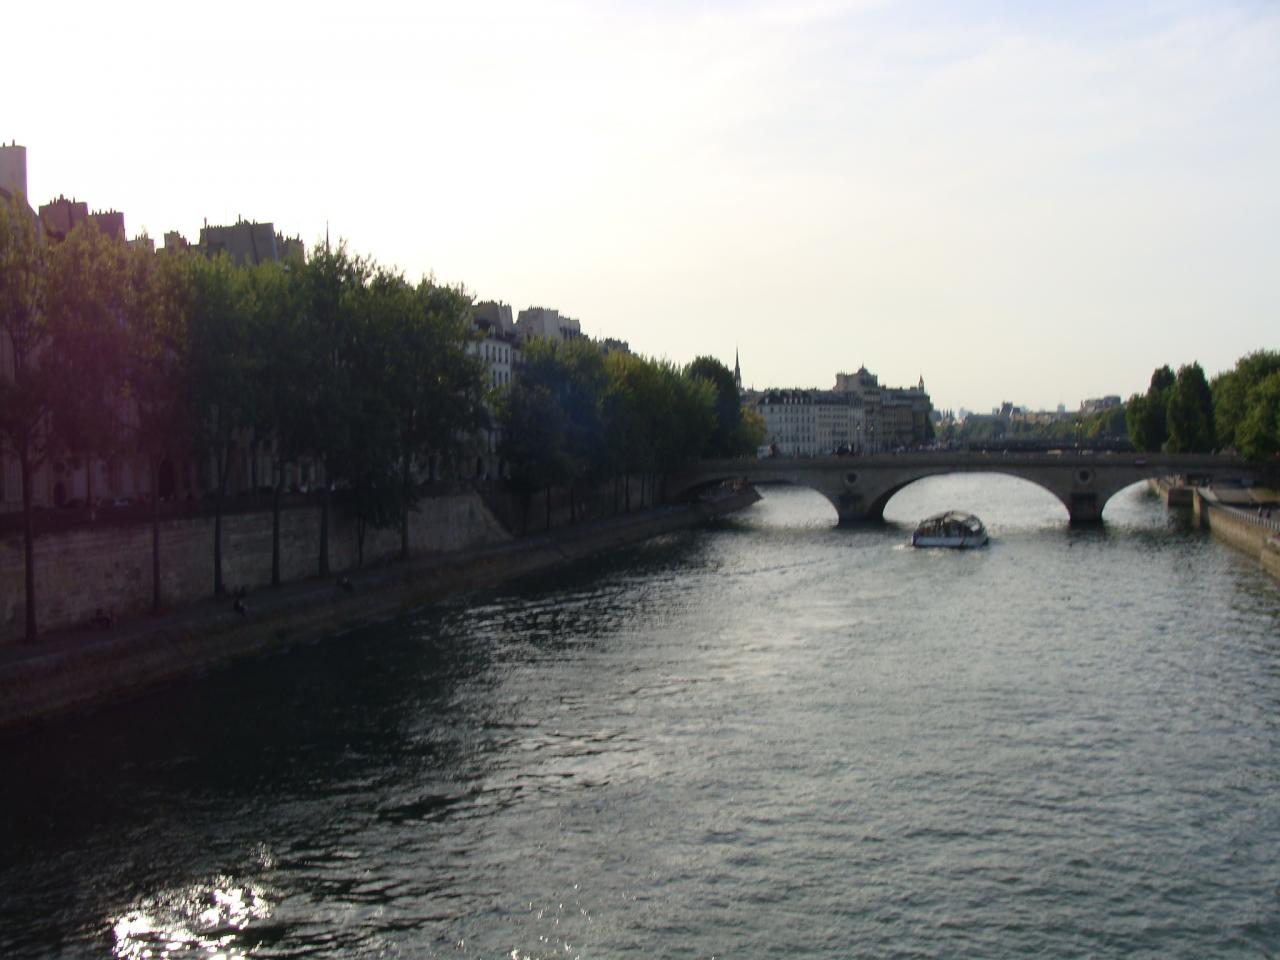 Paris - la Seine